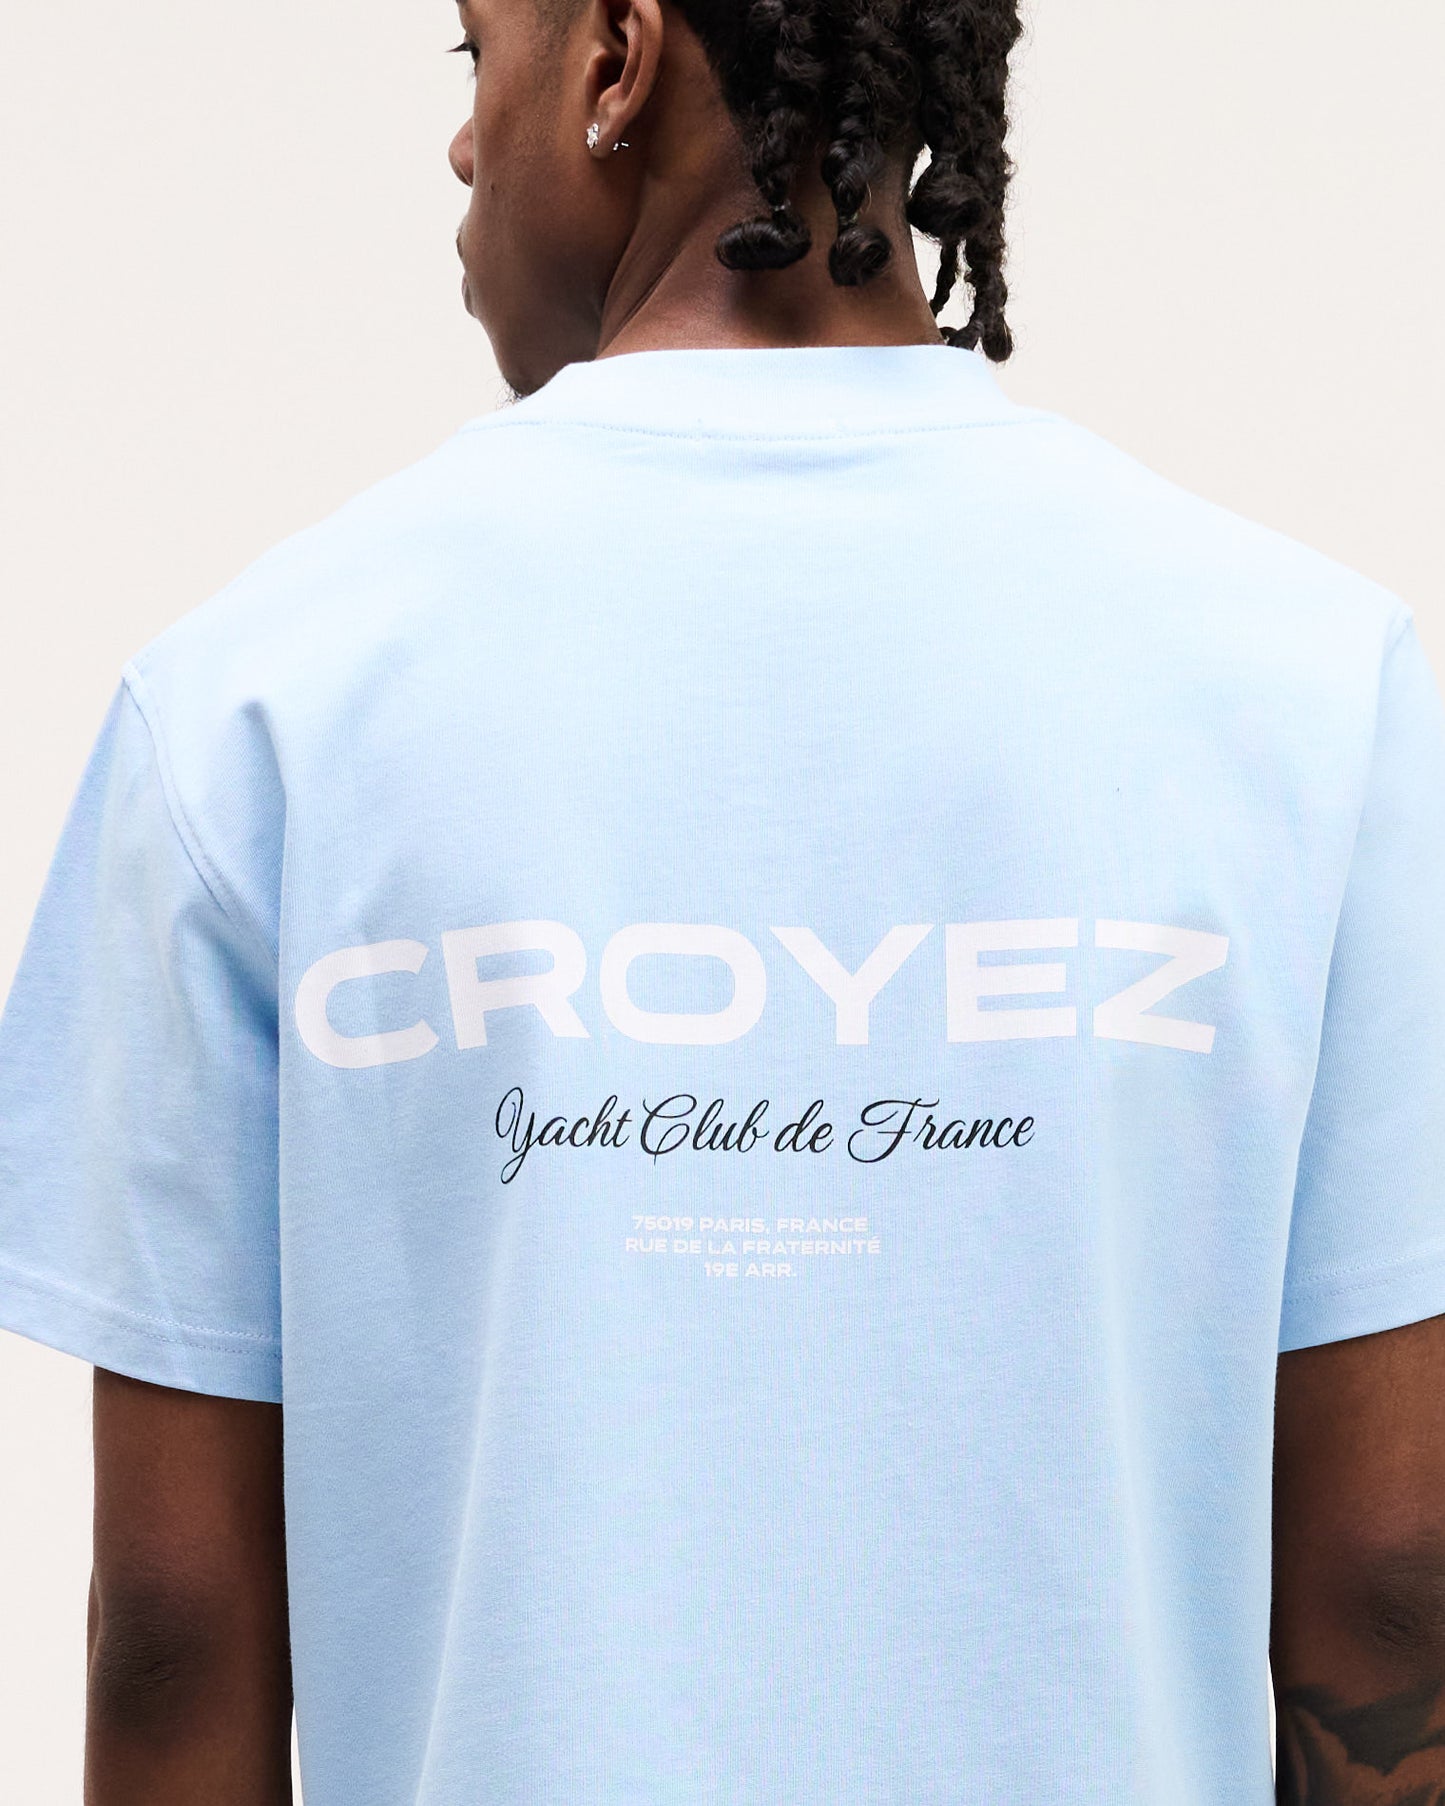 CROYEZ YACHT CLUB T-SHIRT - LIGHT BLUE/WHITE